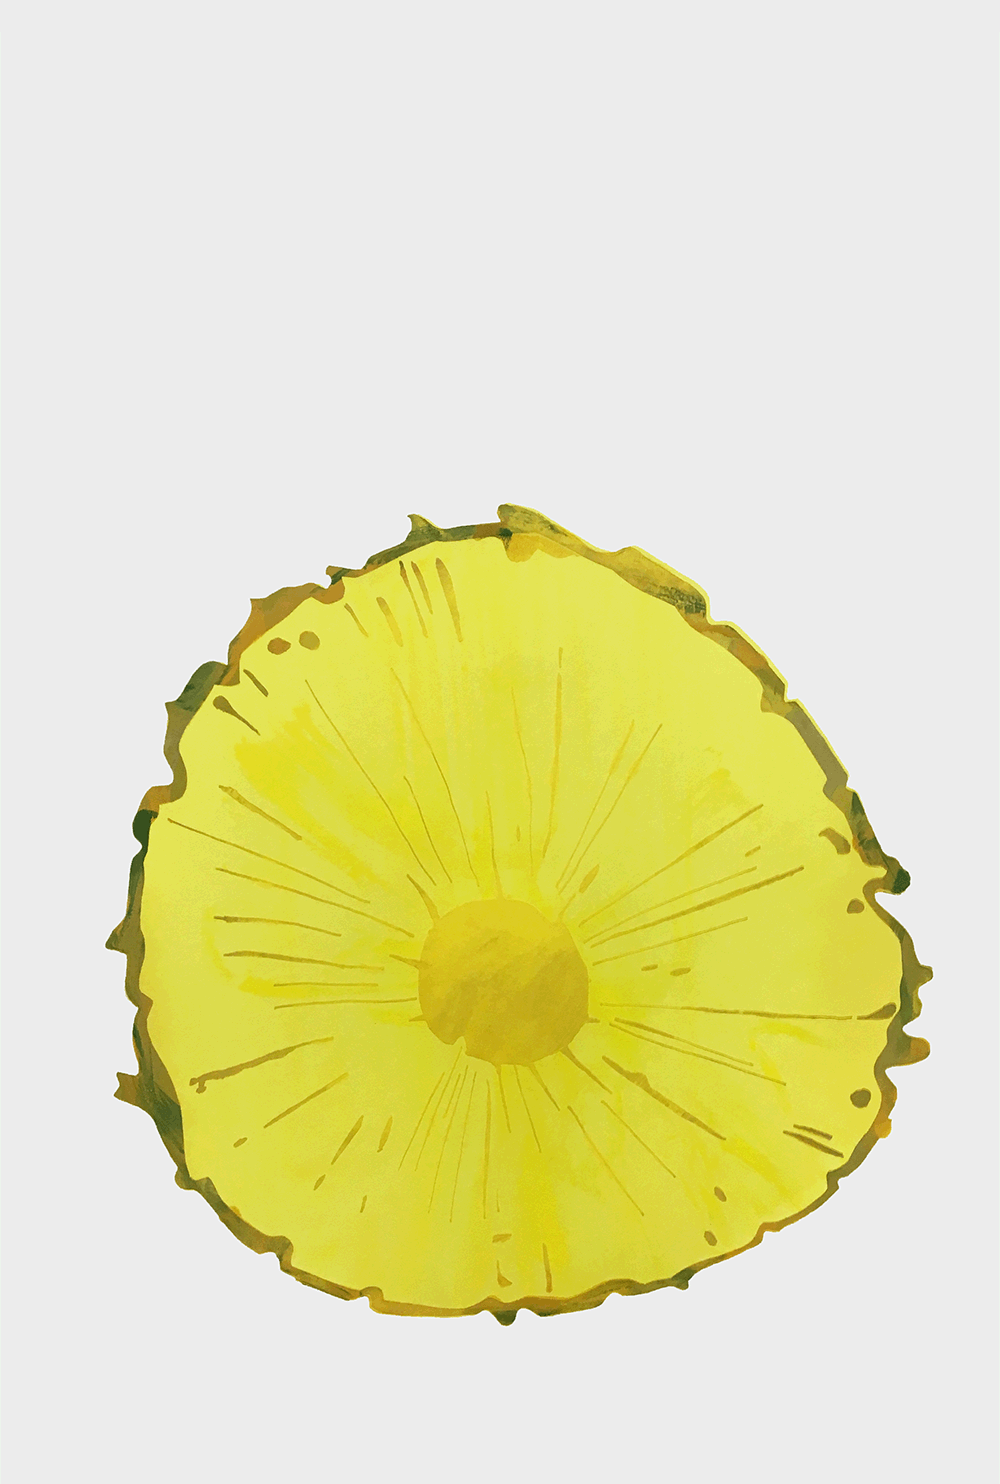  Pineapple Monoprint 